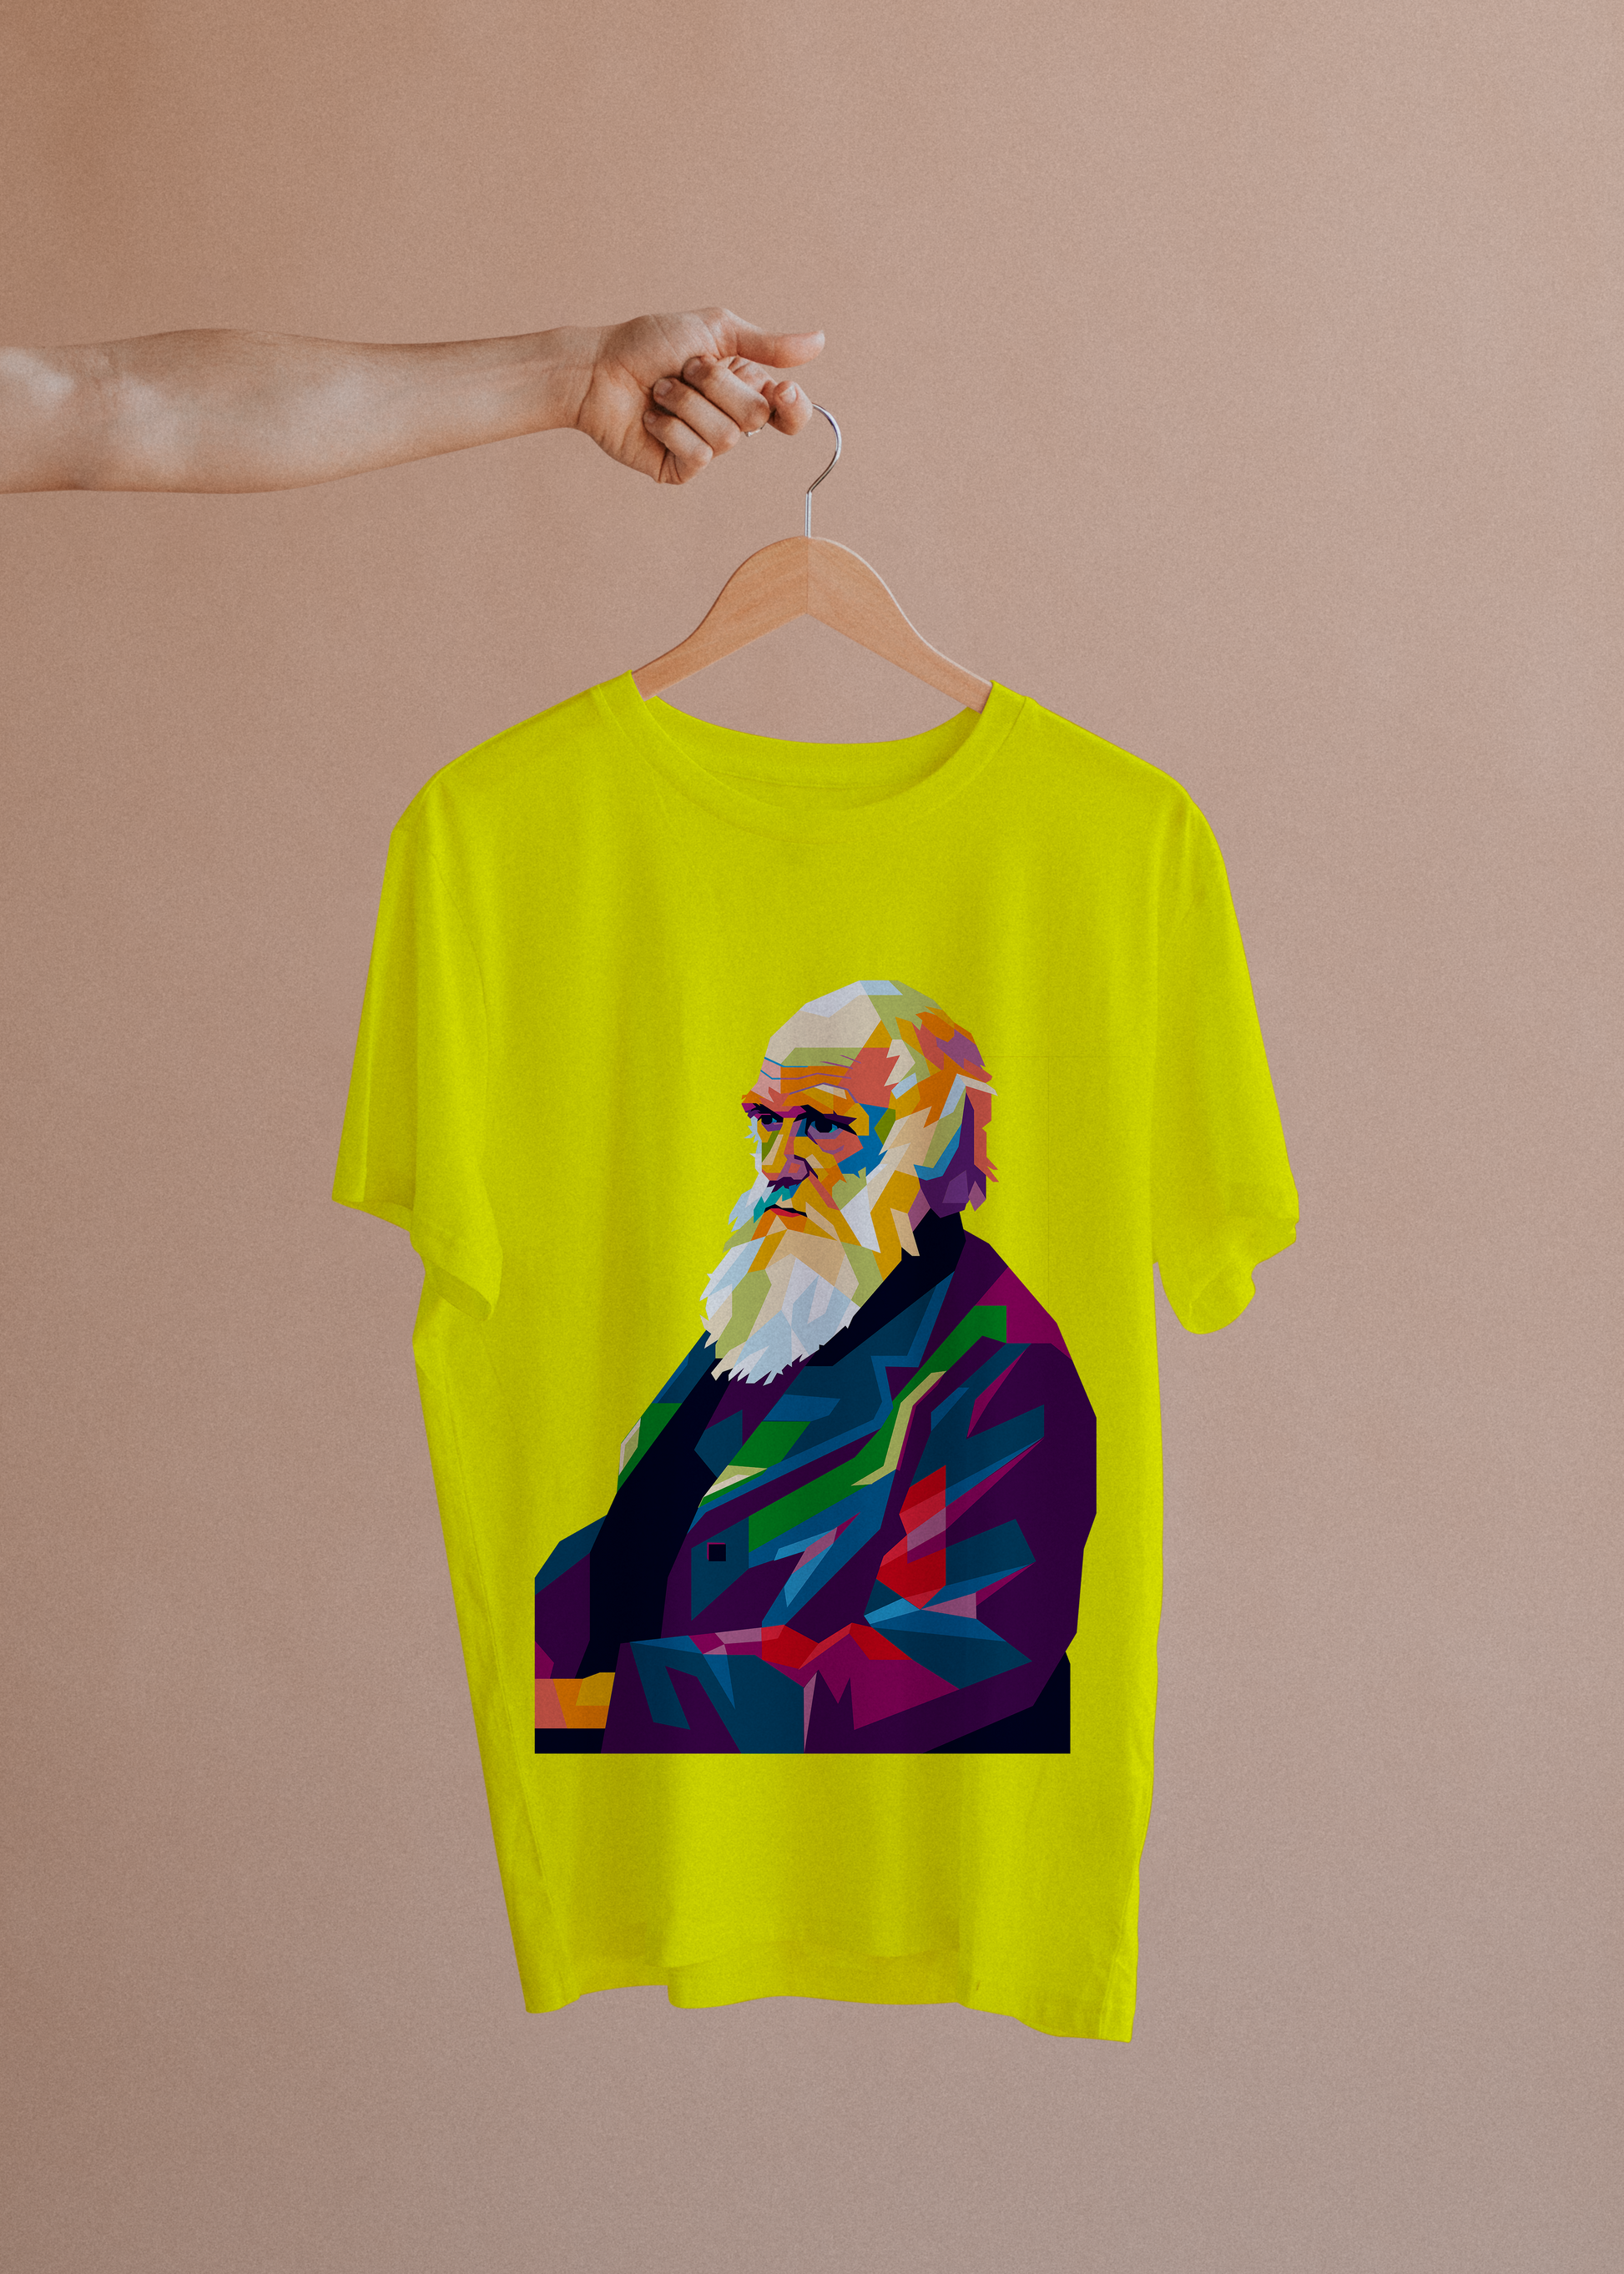 Camiseta Charles Darwin - PopArt - Masculino -camiseta amarela - Editora Datum